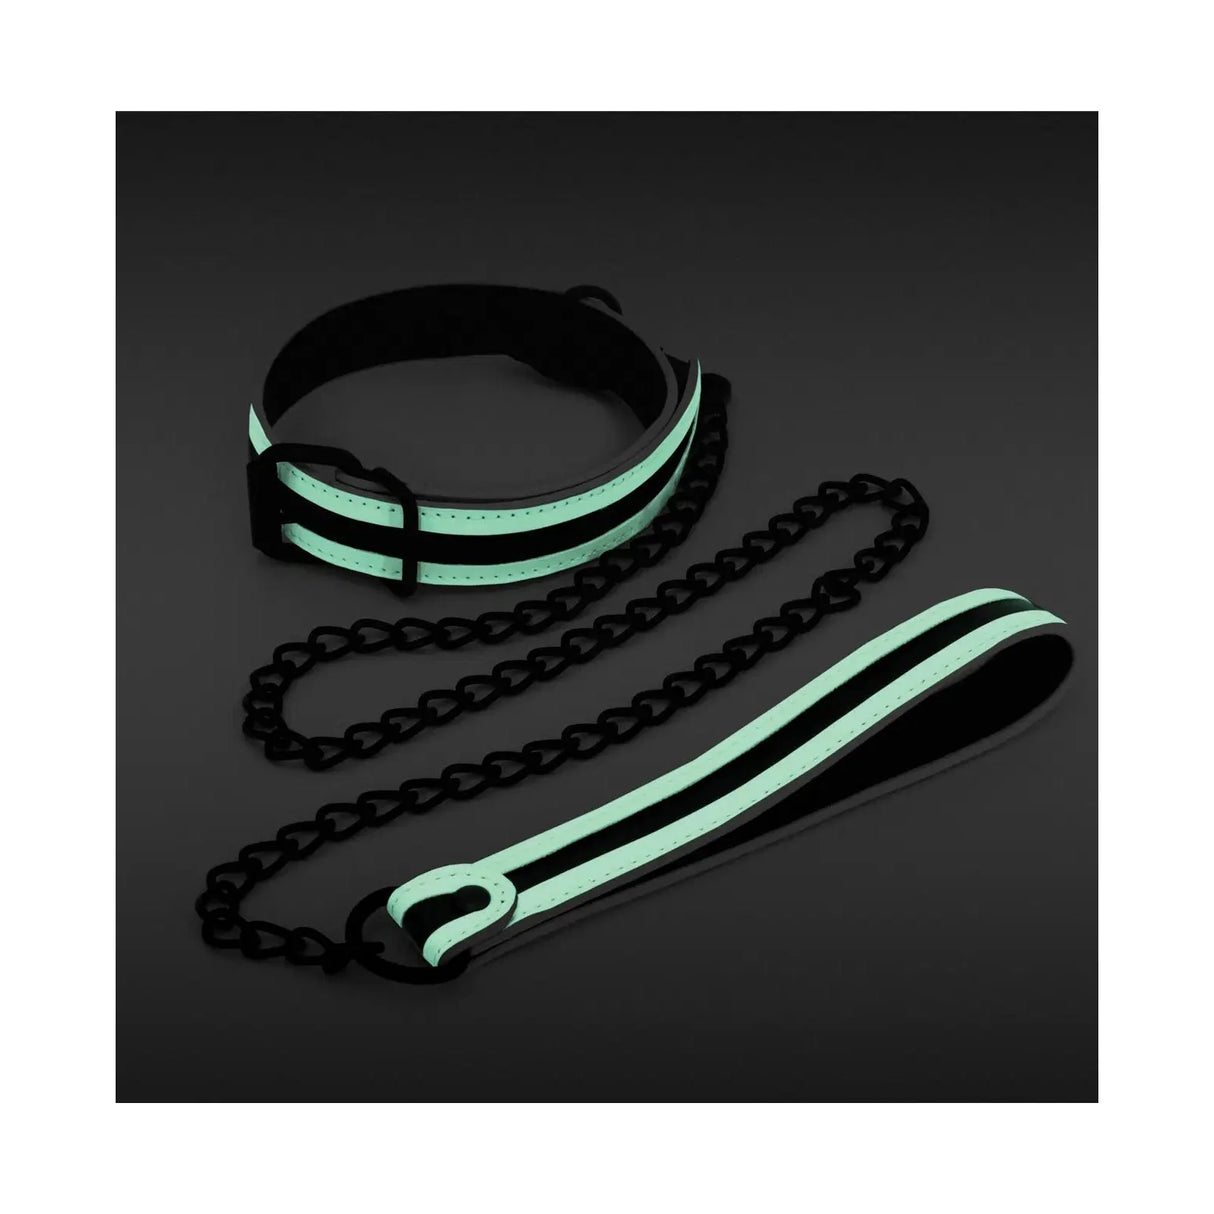 GLO Bondage Glow-In-The-Dark Collar & Leash Set